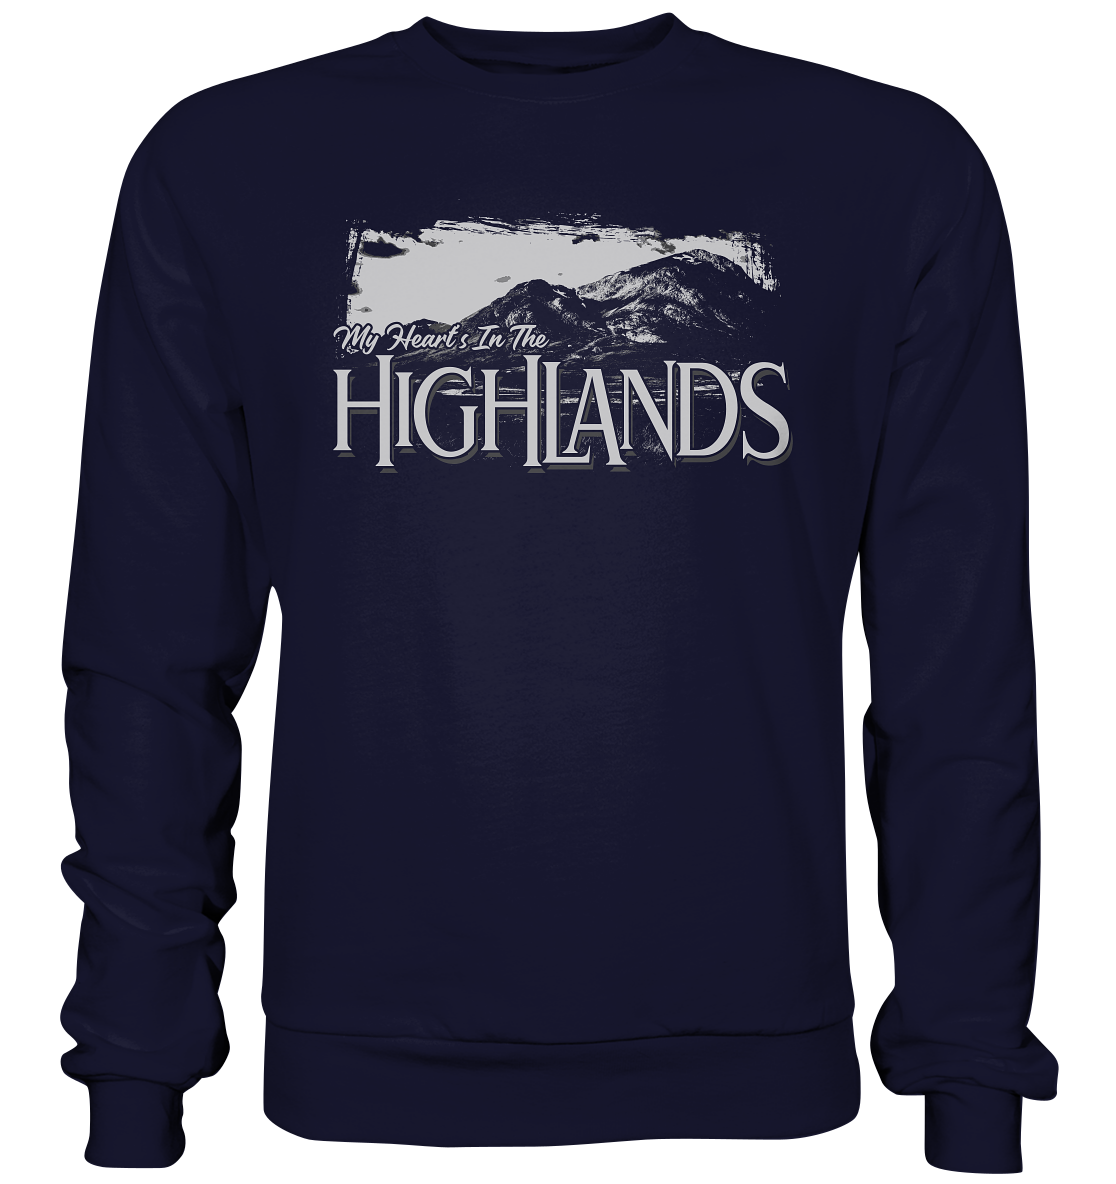 "My Heart's In The Highlands" - Basic Sweatshirt